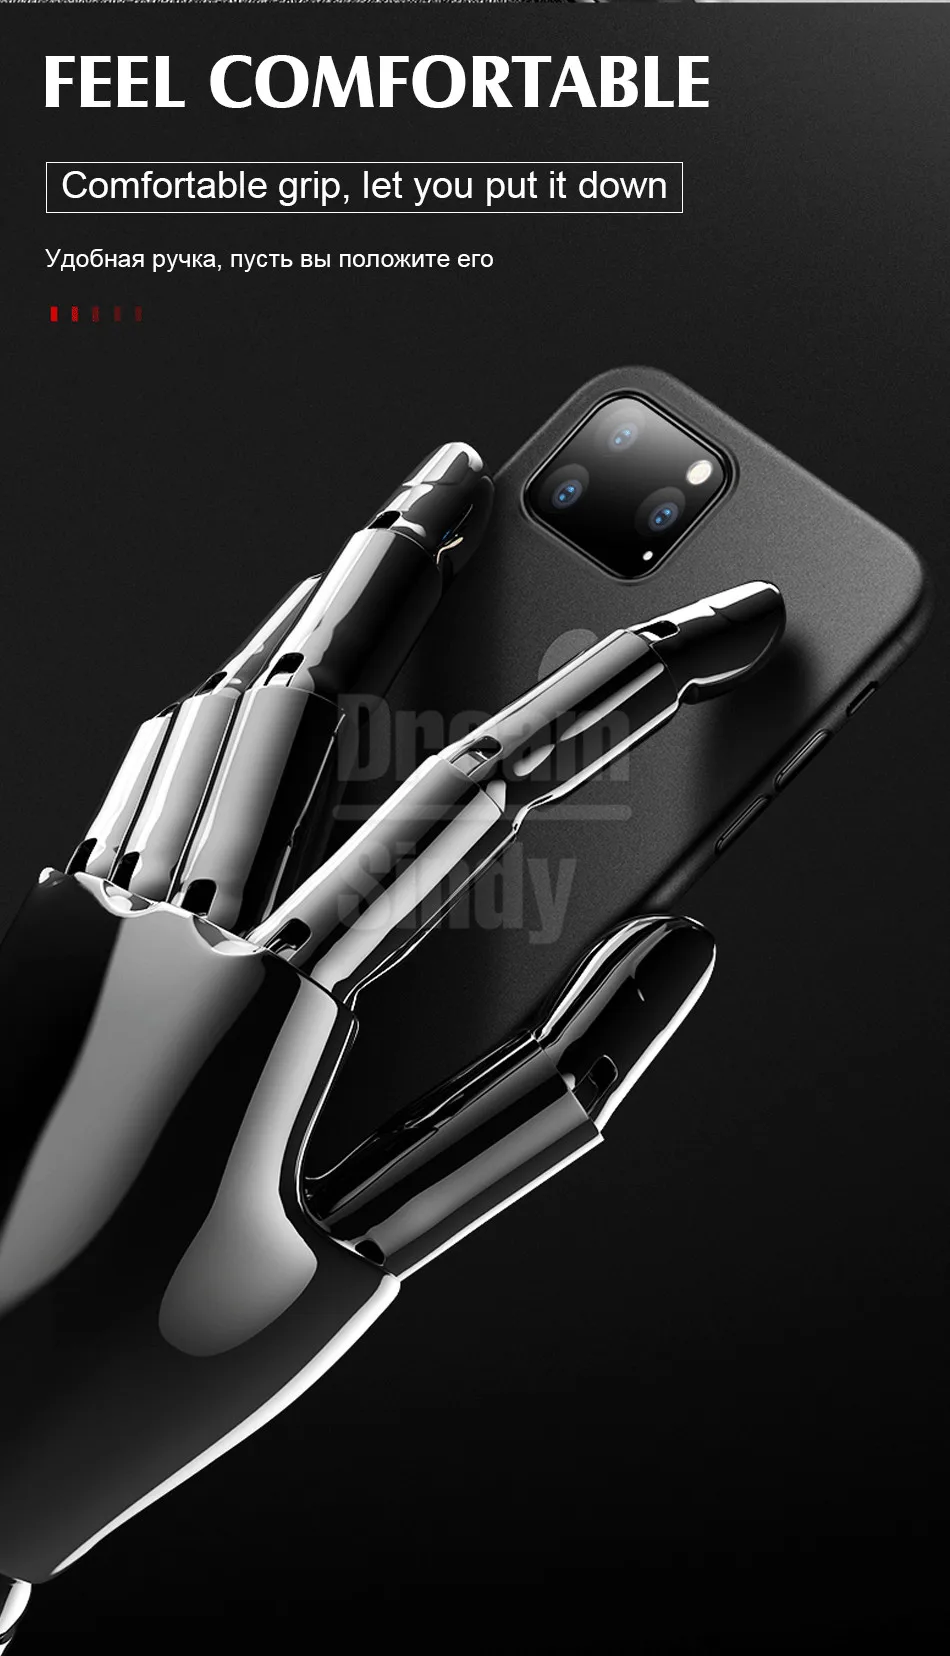 Роскошный ультра тонкий чехол 0,26 мм для iPhone 11 Pro XS Max XR XS X чехол для iPhone 6 6s 7 8 Plus PC противоударный чехол